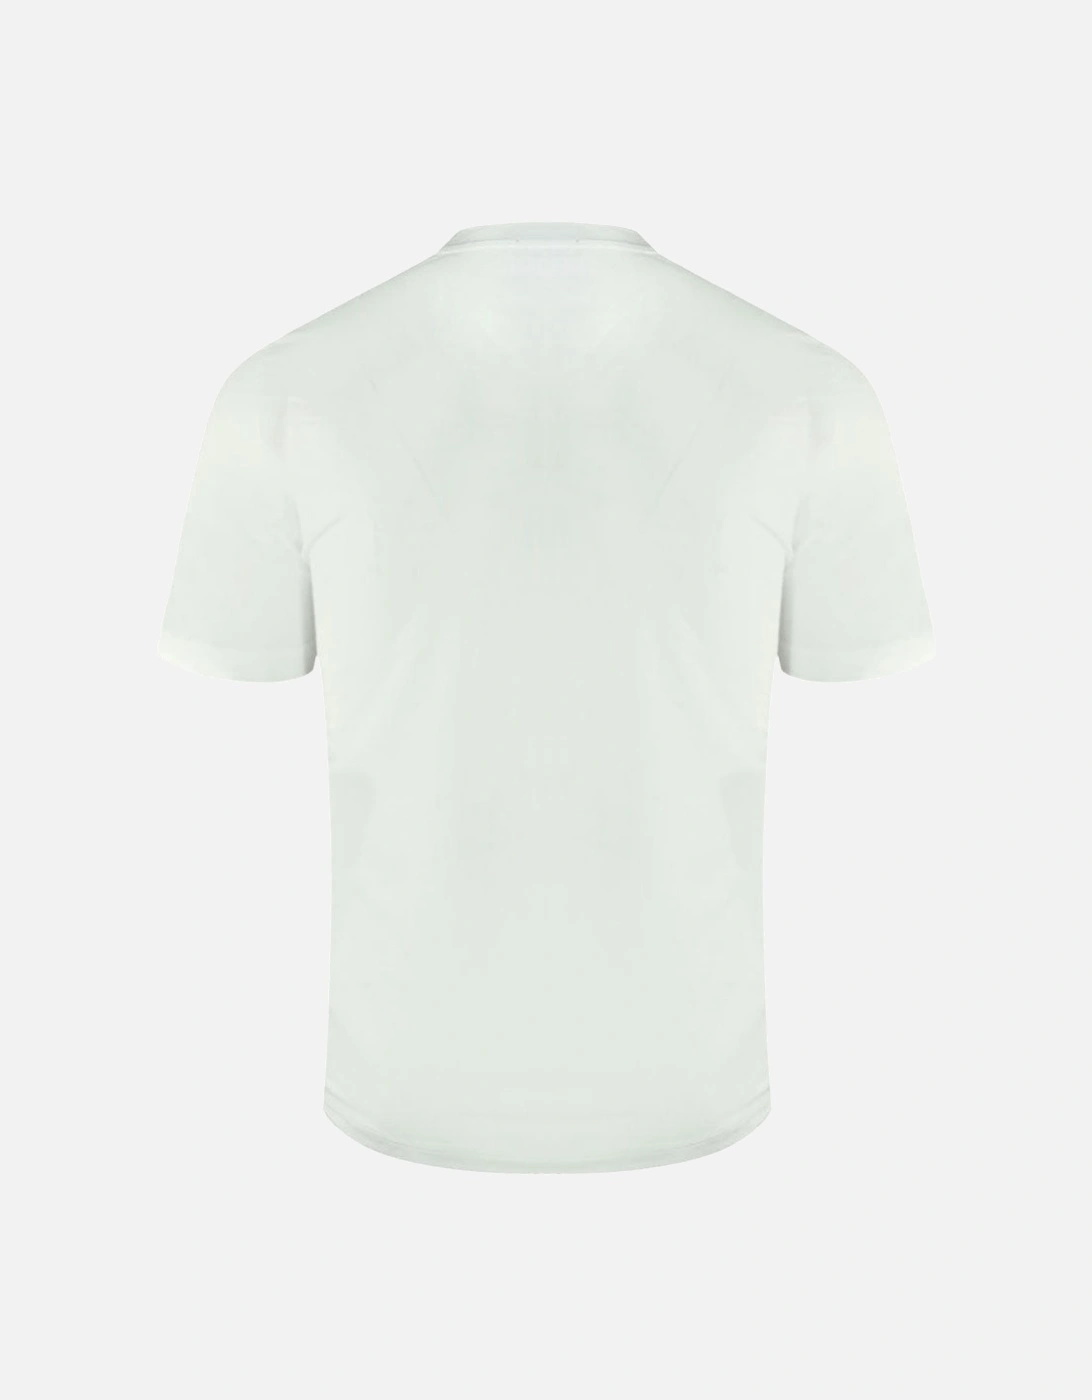 Flawless White T-shirt